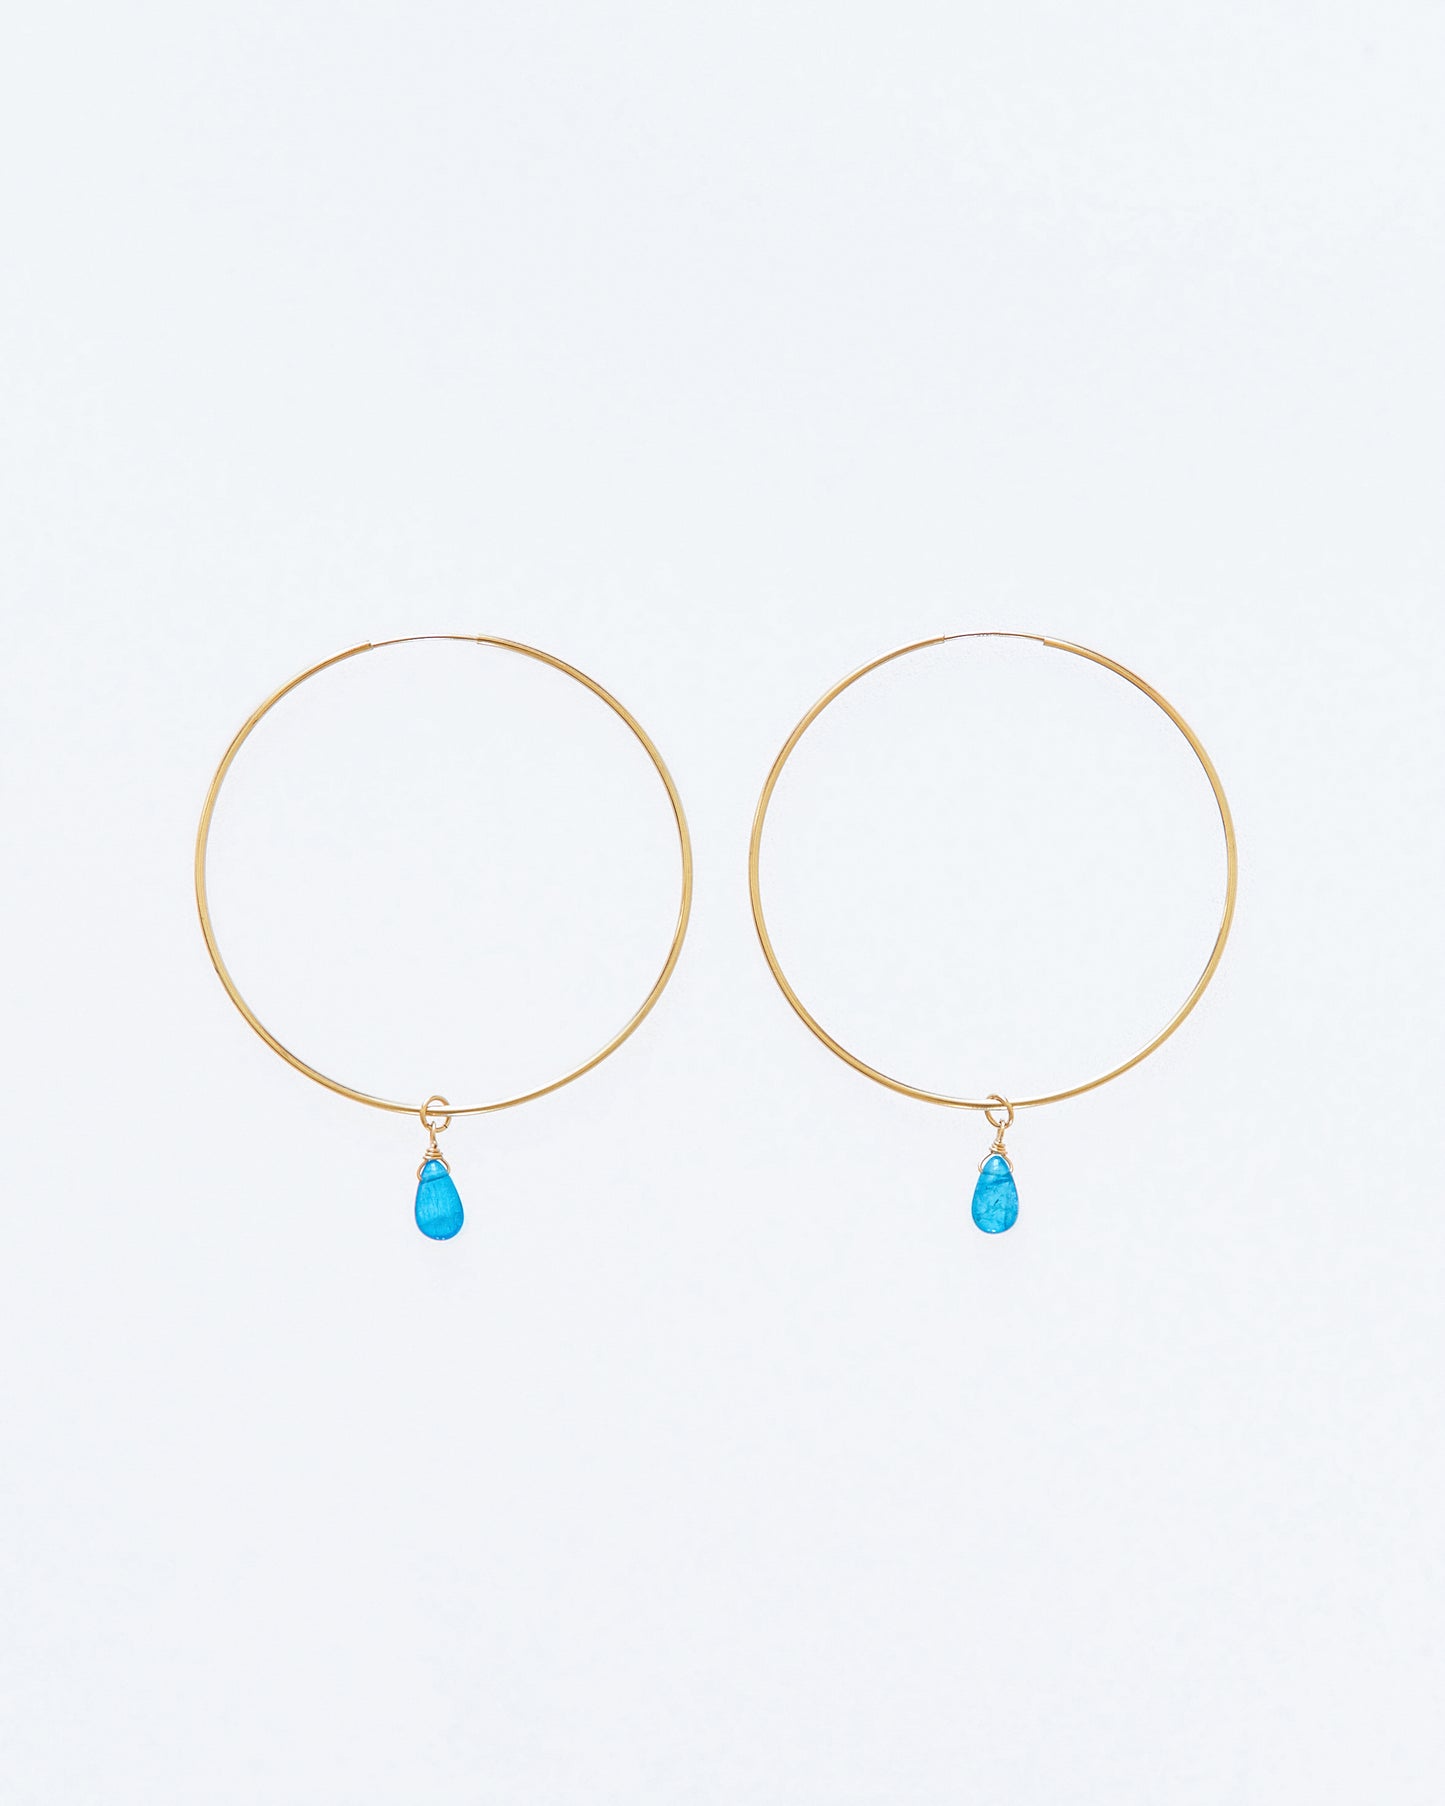 14K Gold Filled Blue Apatite Hoop Earrings | Inspiration Her Jewellery